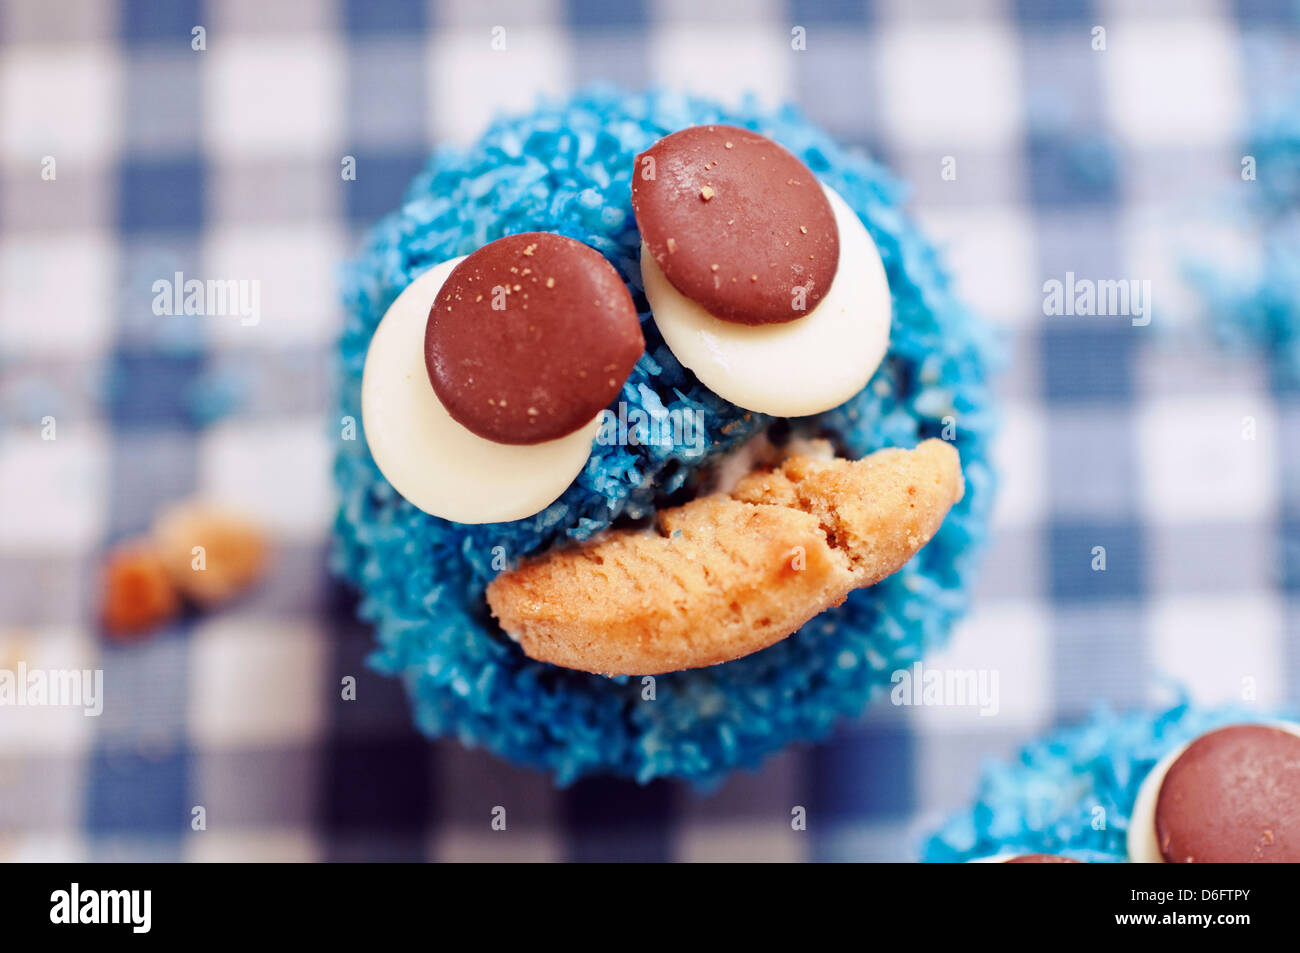 Cookie monster cupcake Stock Photo